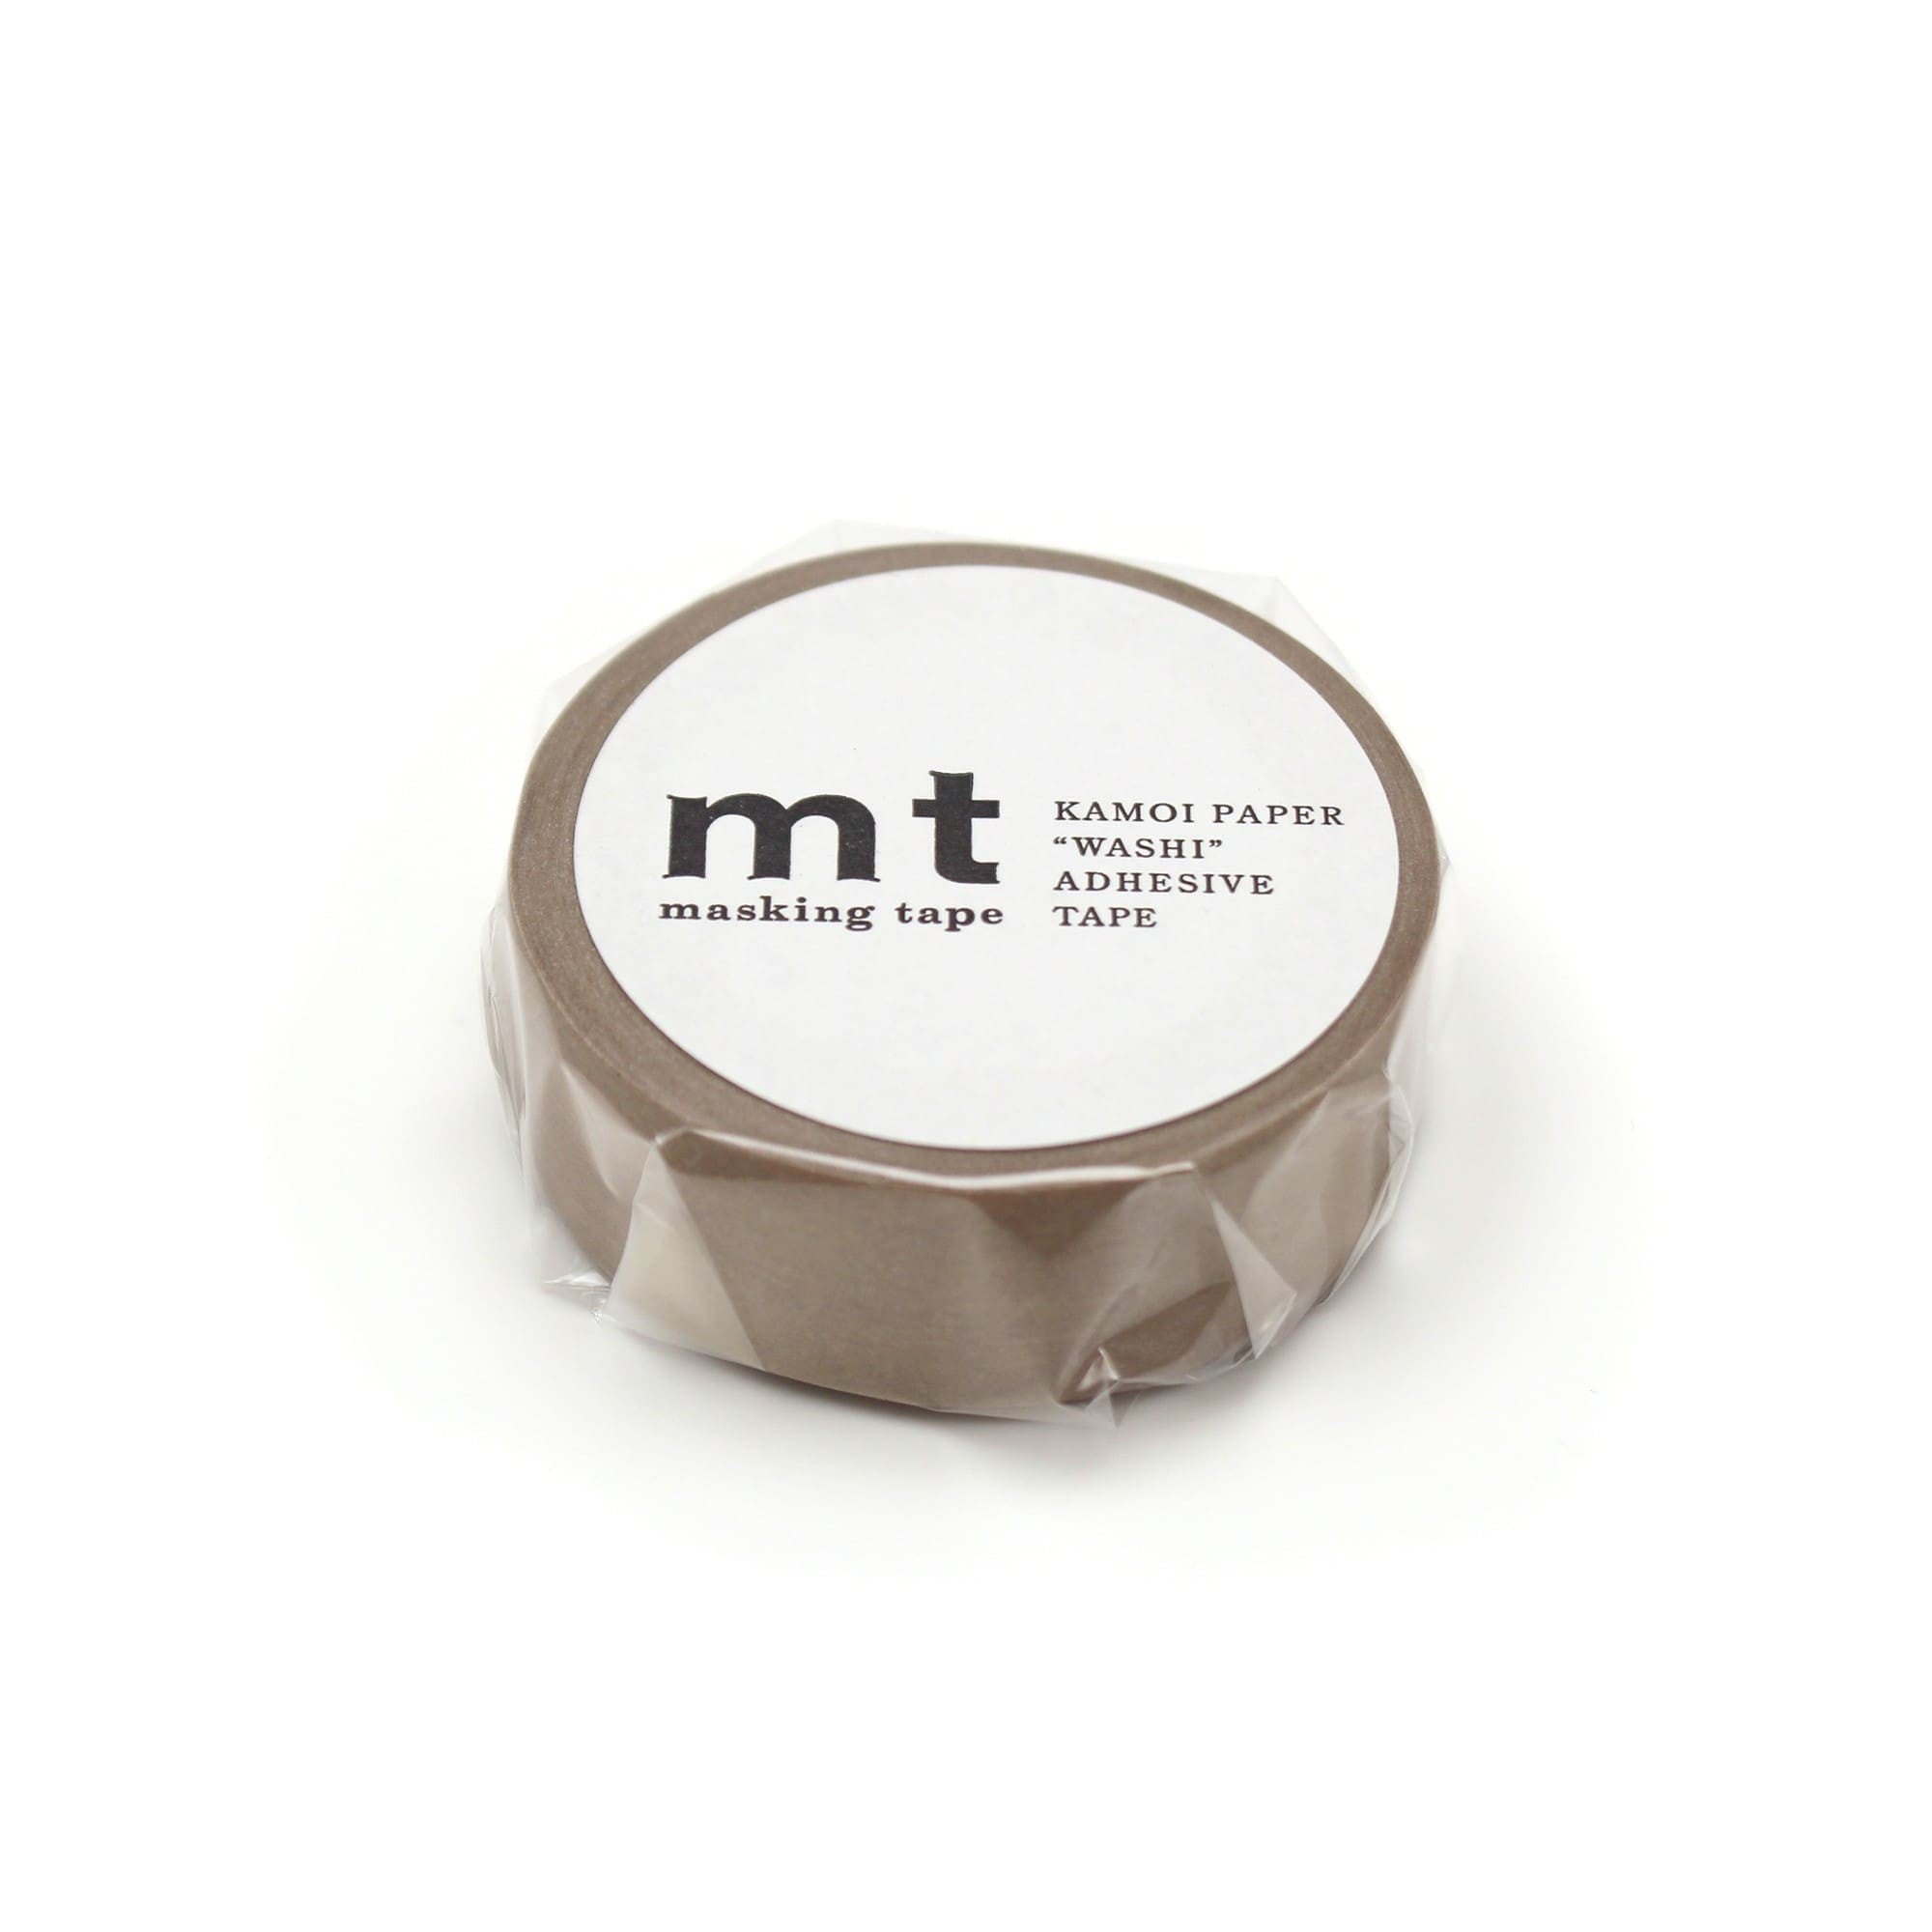 Washi Tape Matte - Smoky beige - MT masking tape - Tidformera